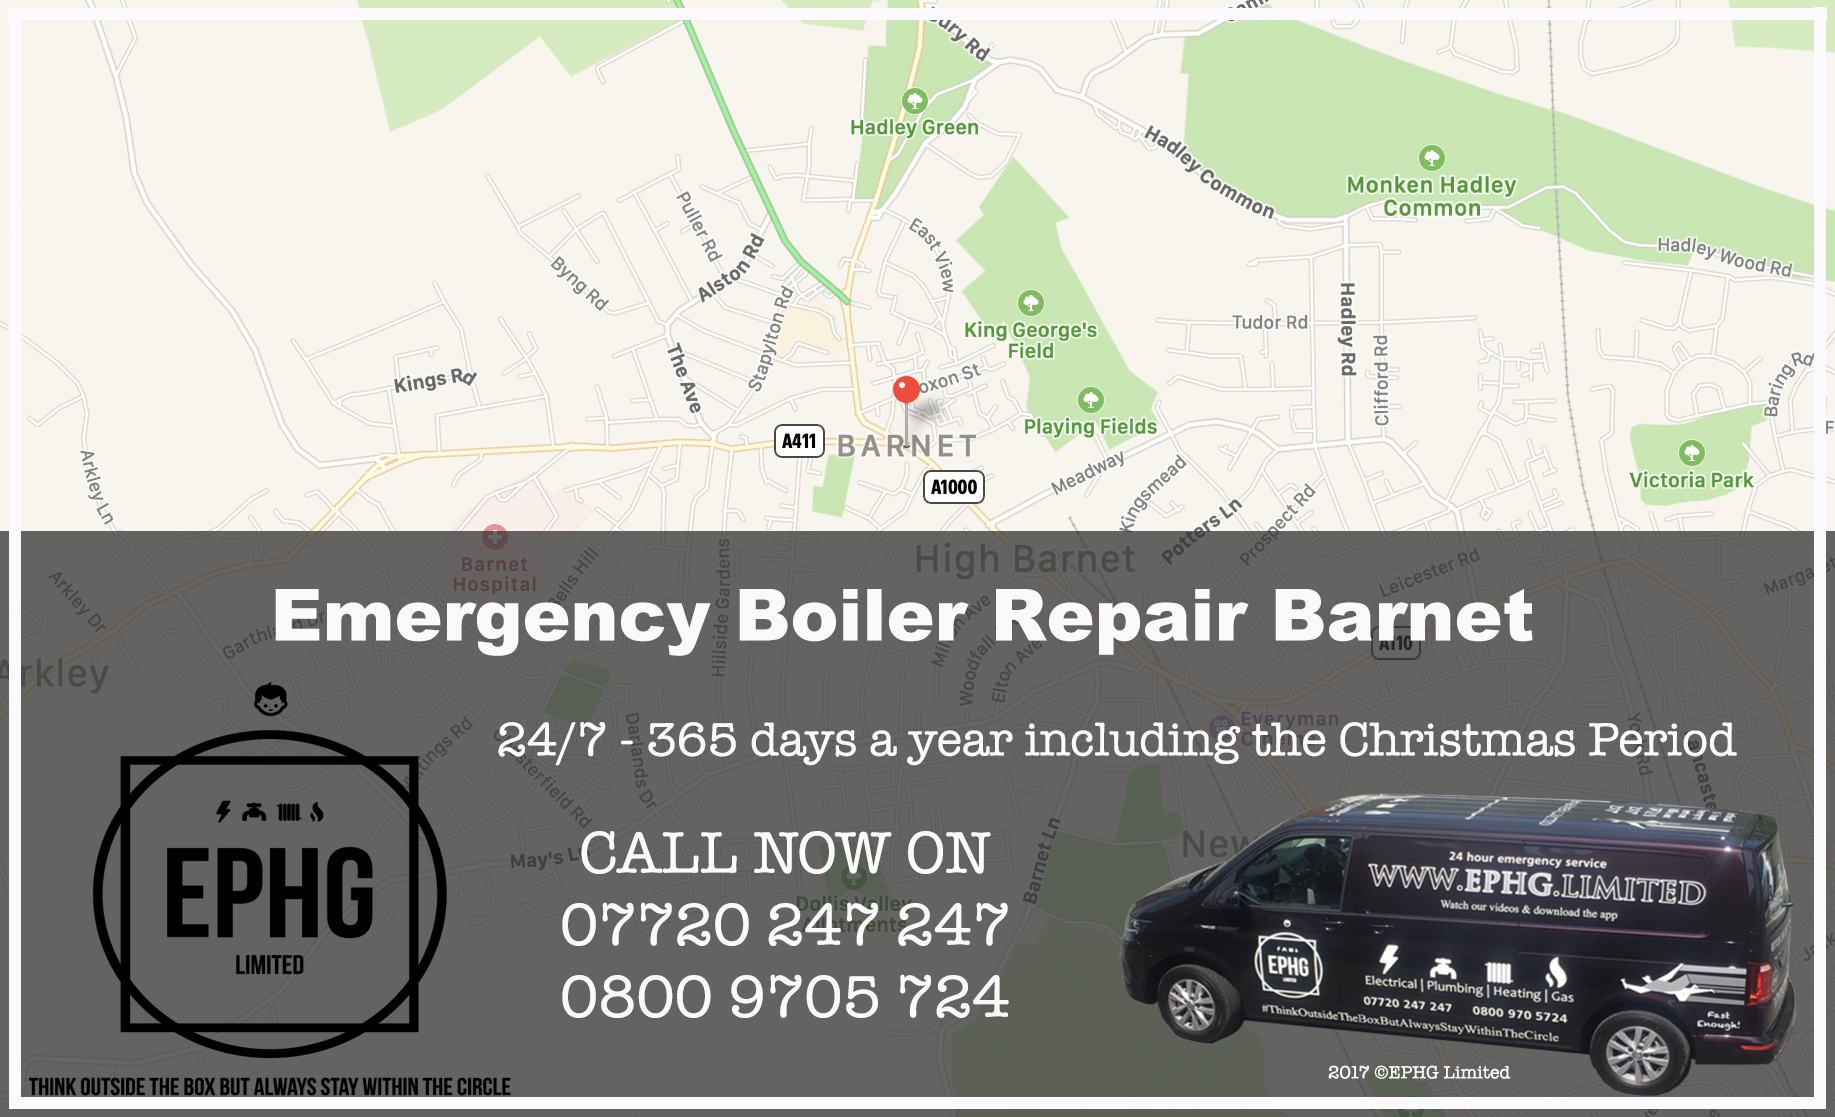 24 Hour Emergency Boiler Repair Barnet